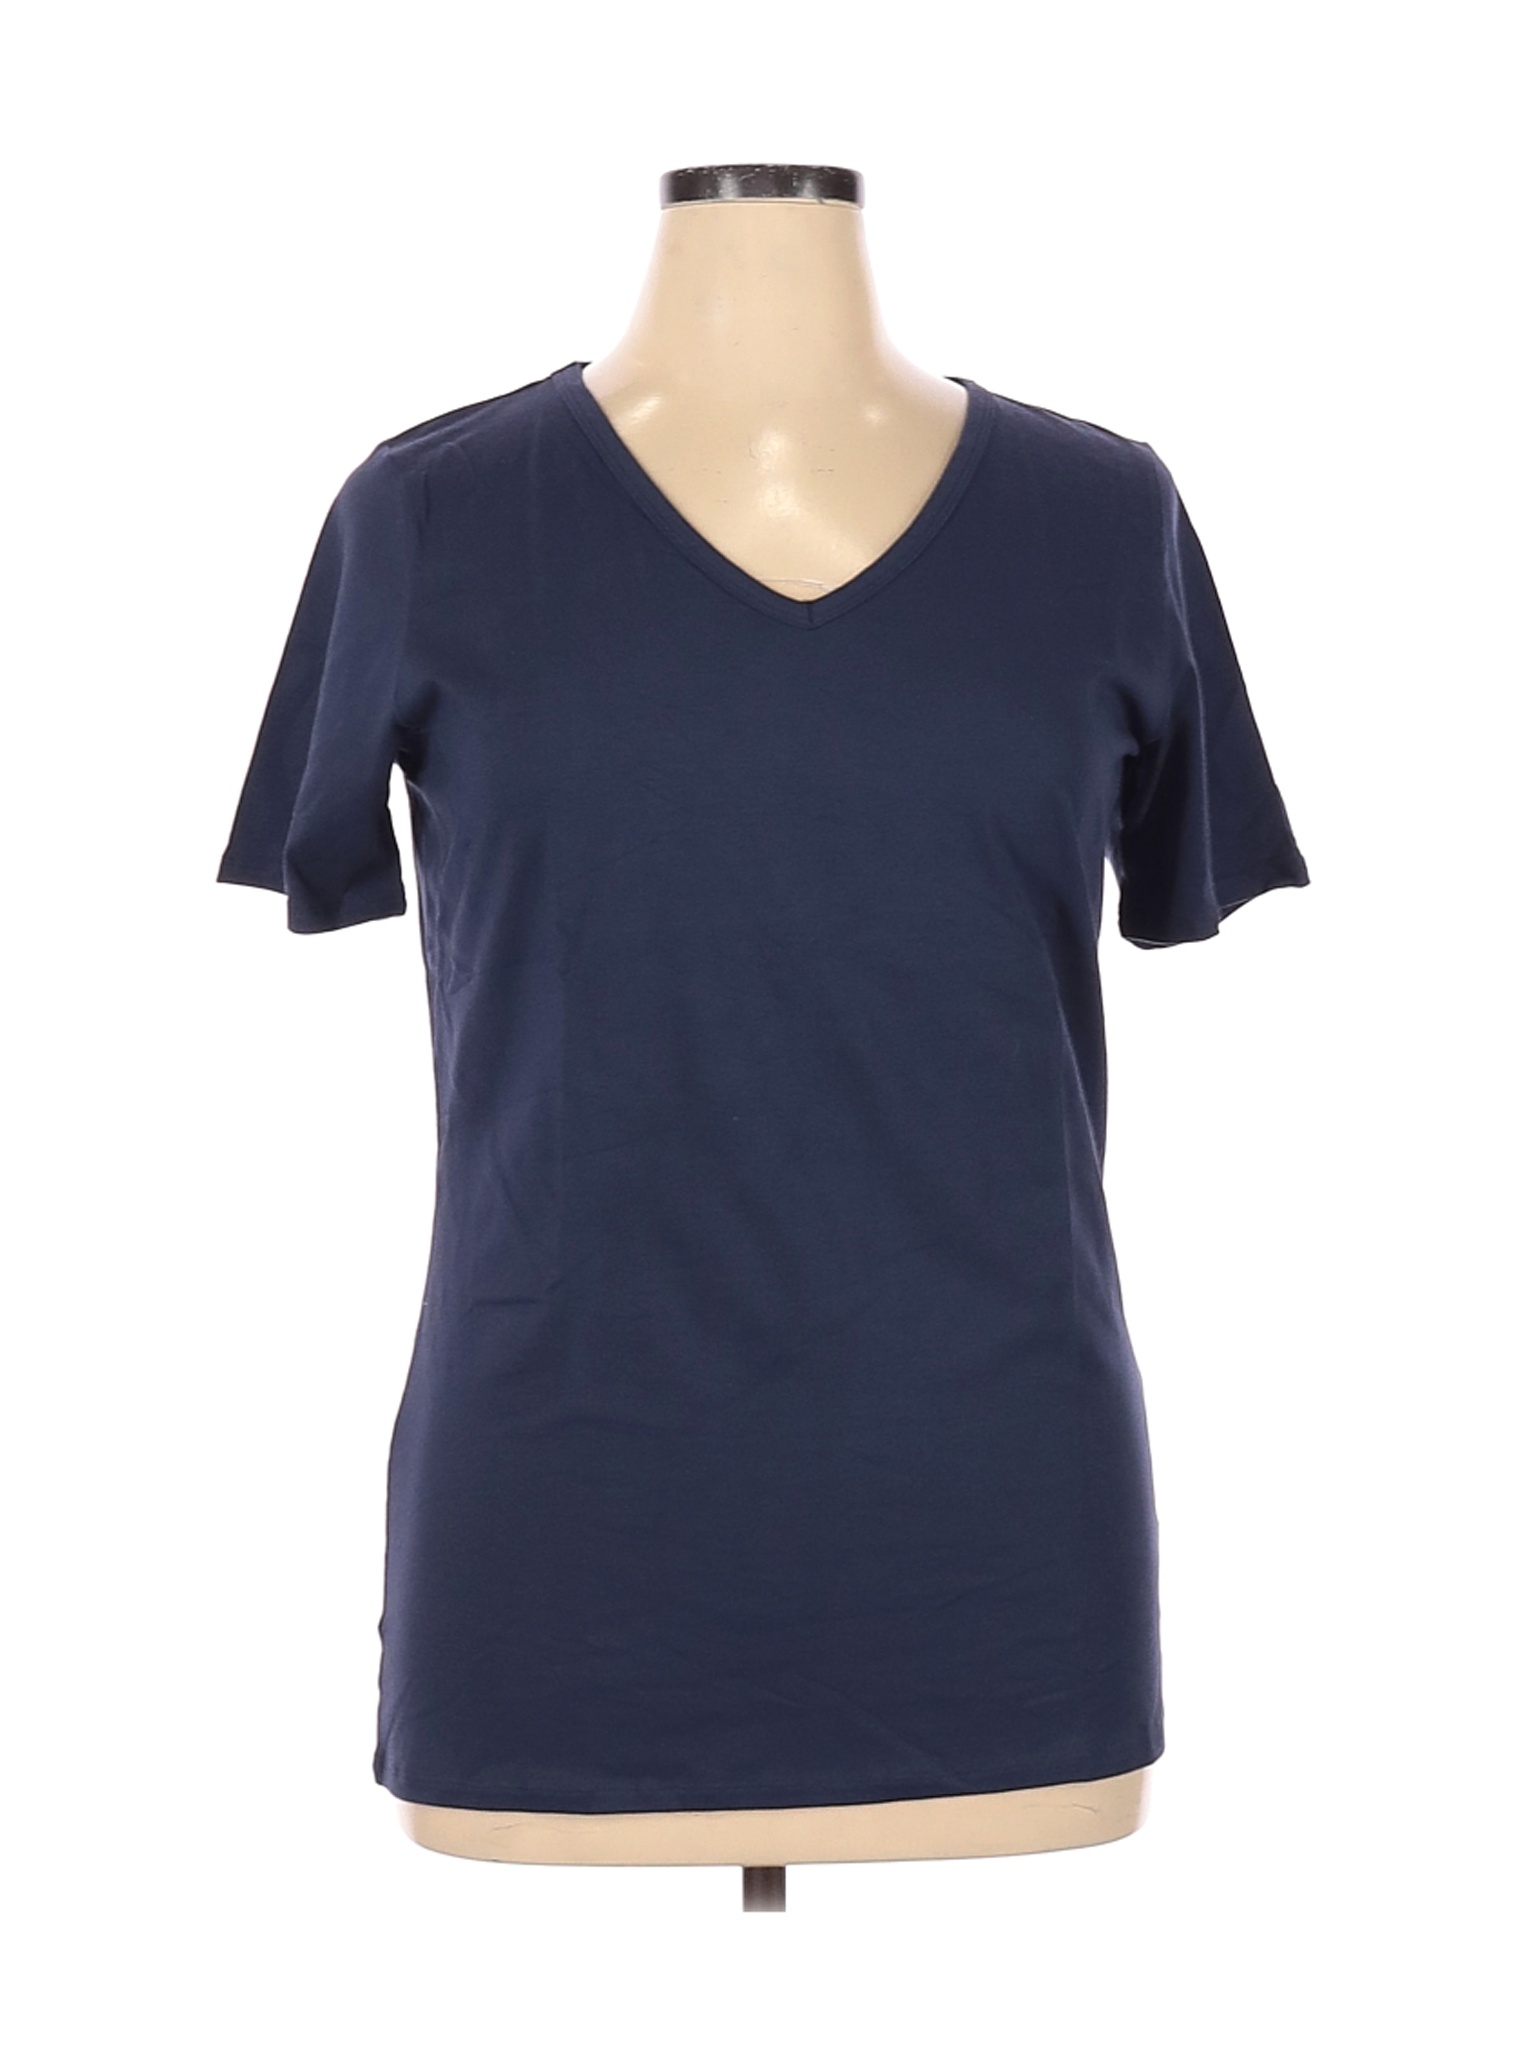 Duluth Trading Co. Women Blue Short Sleeve T-Shirt XL | eBay